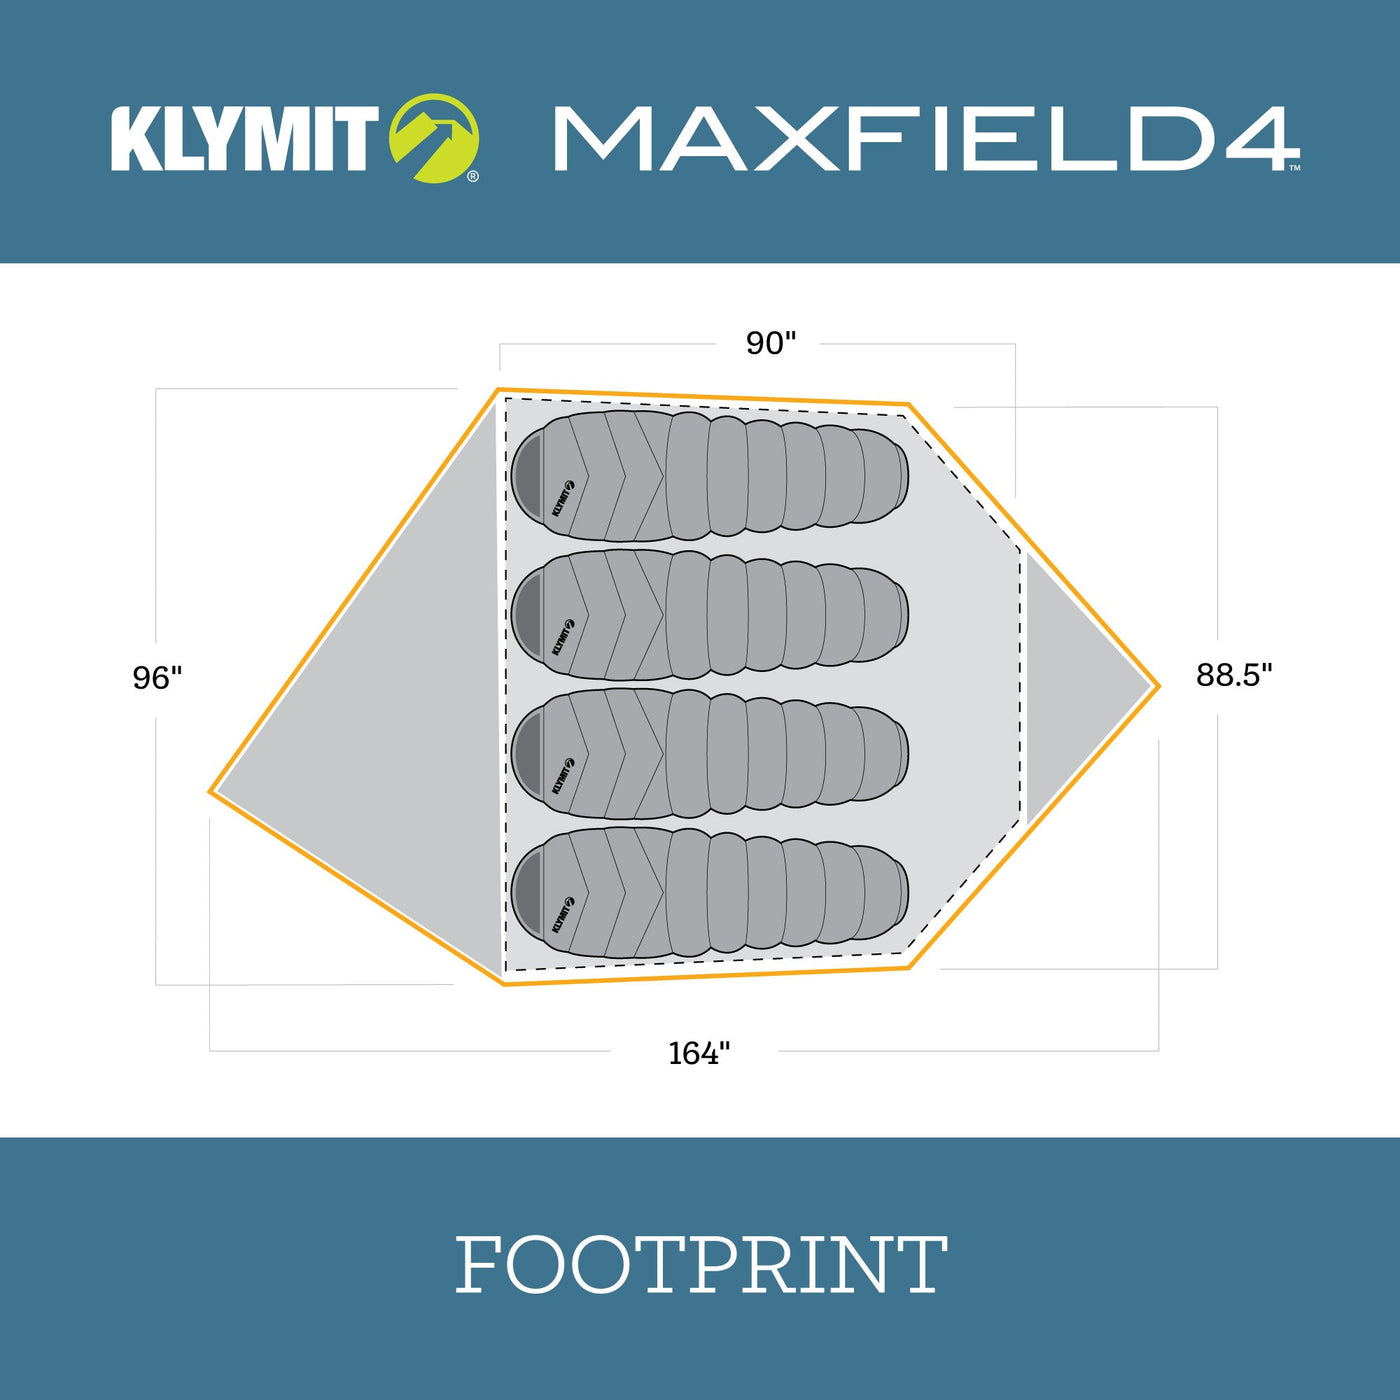 Maxfield Tents by Klymit